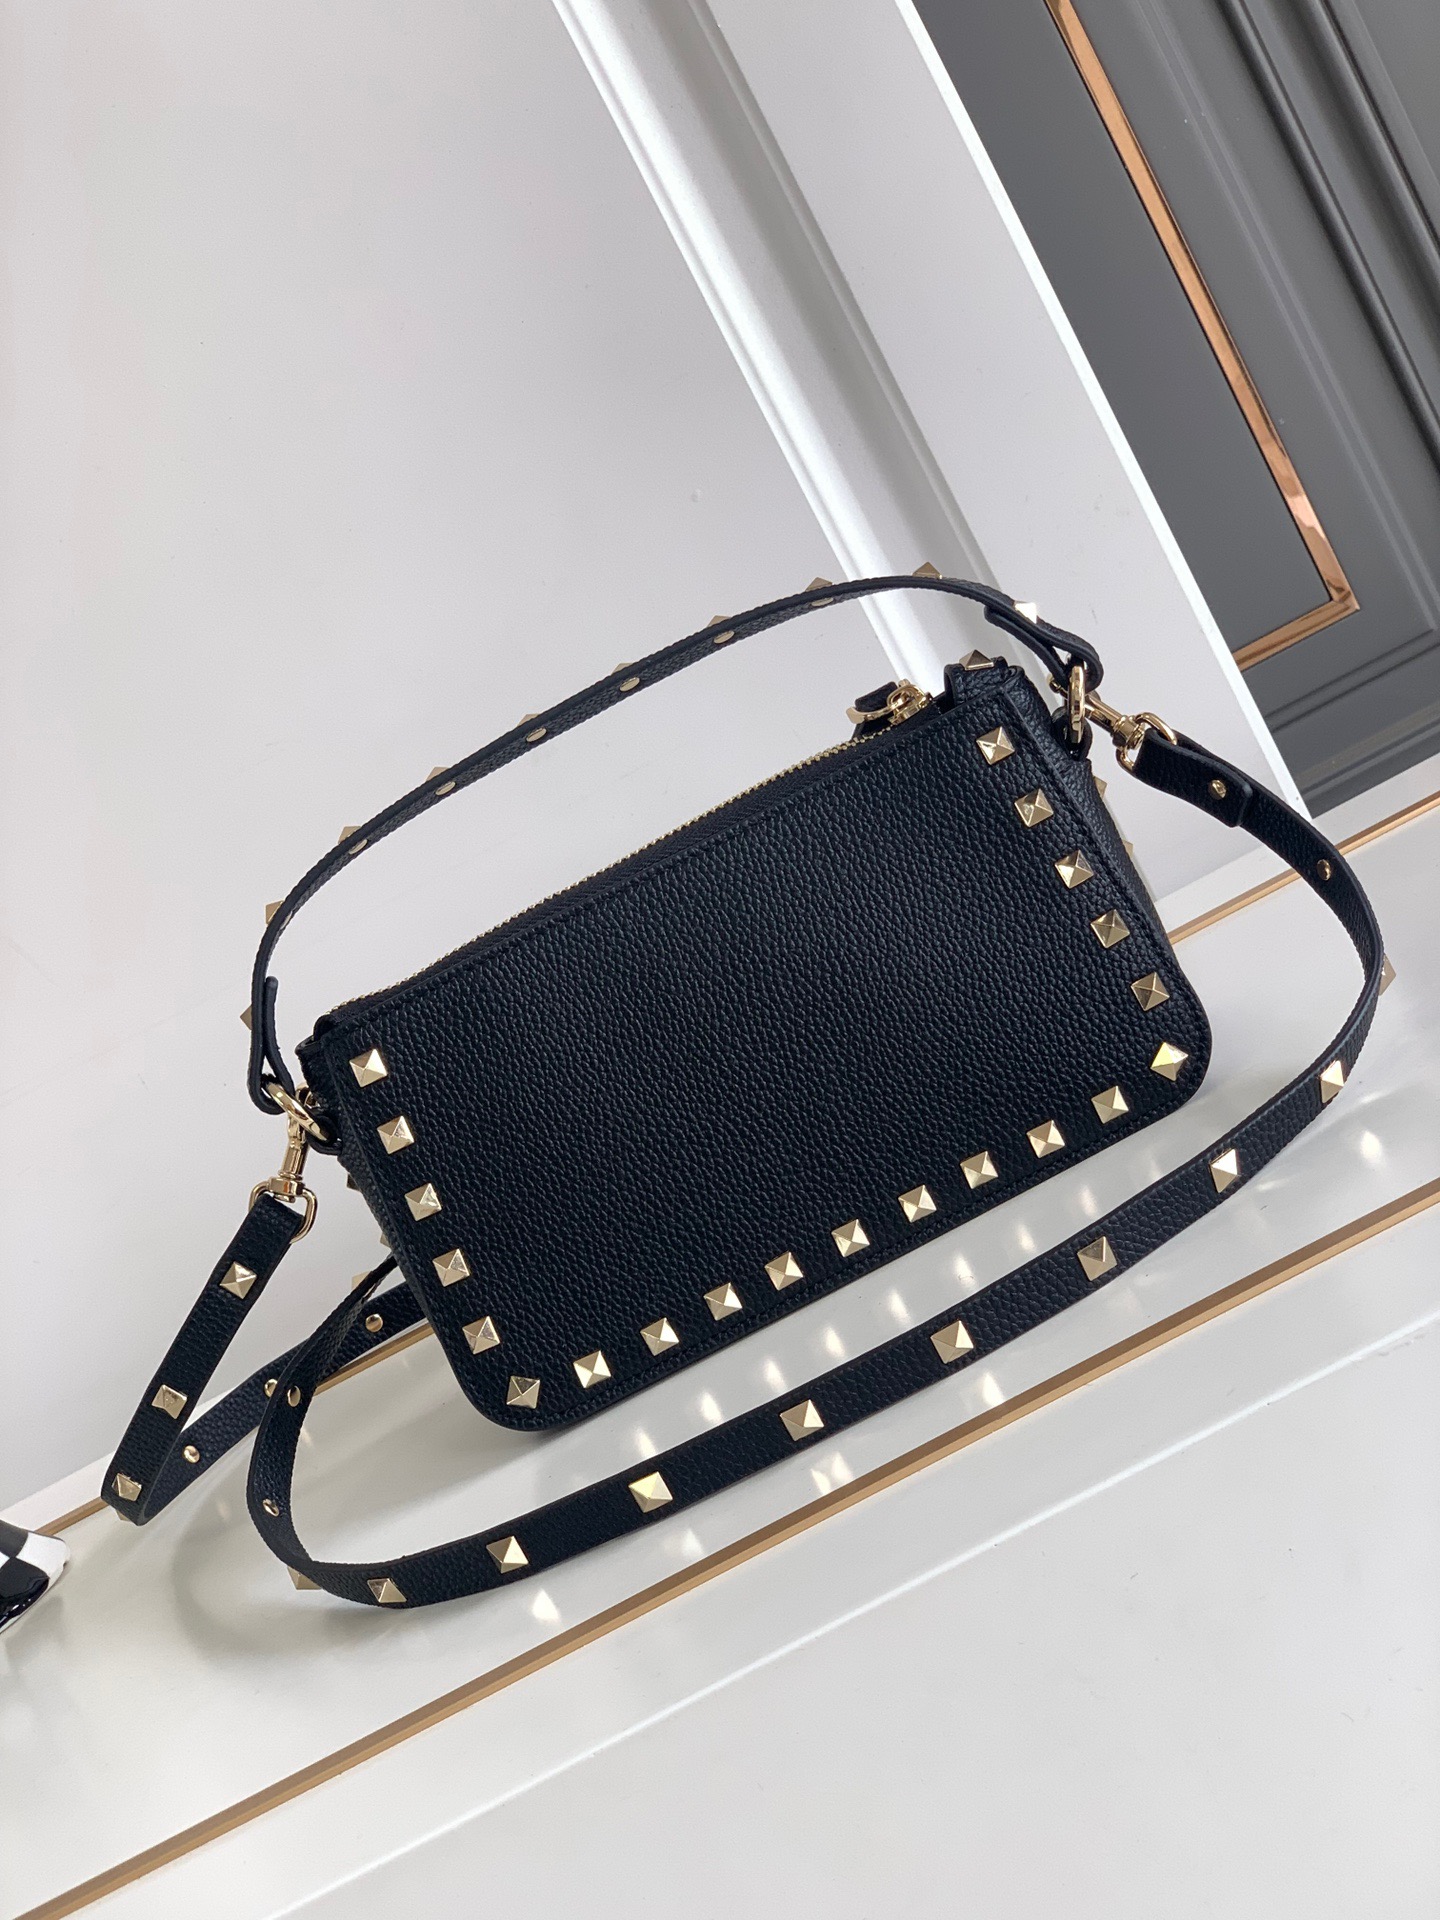 7A designer bag women channel hobo bag handbag high quality Genuine Leather bag Chain bags fashion with trendy Small square bag -V 7778